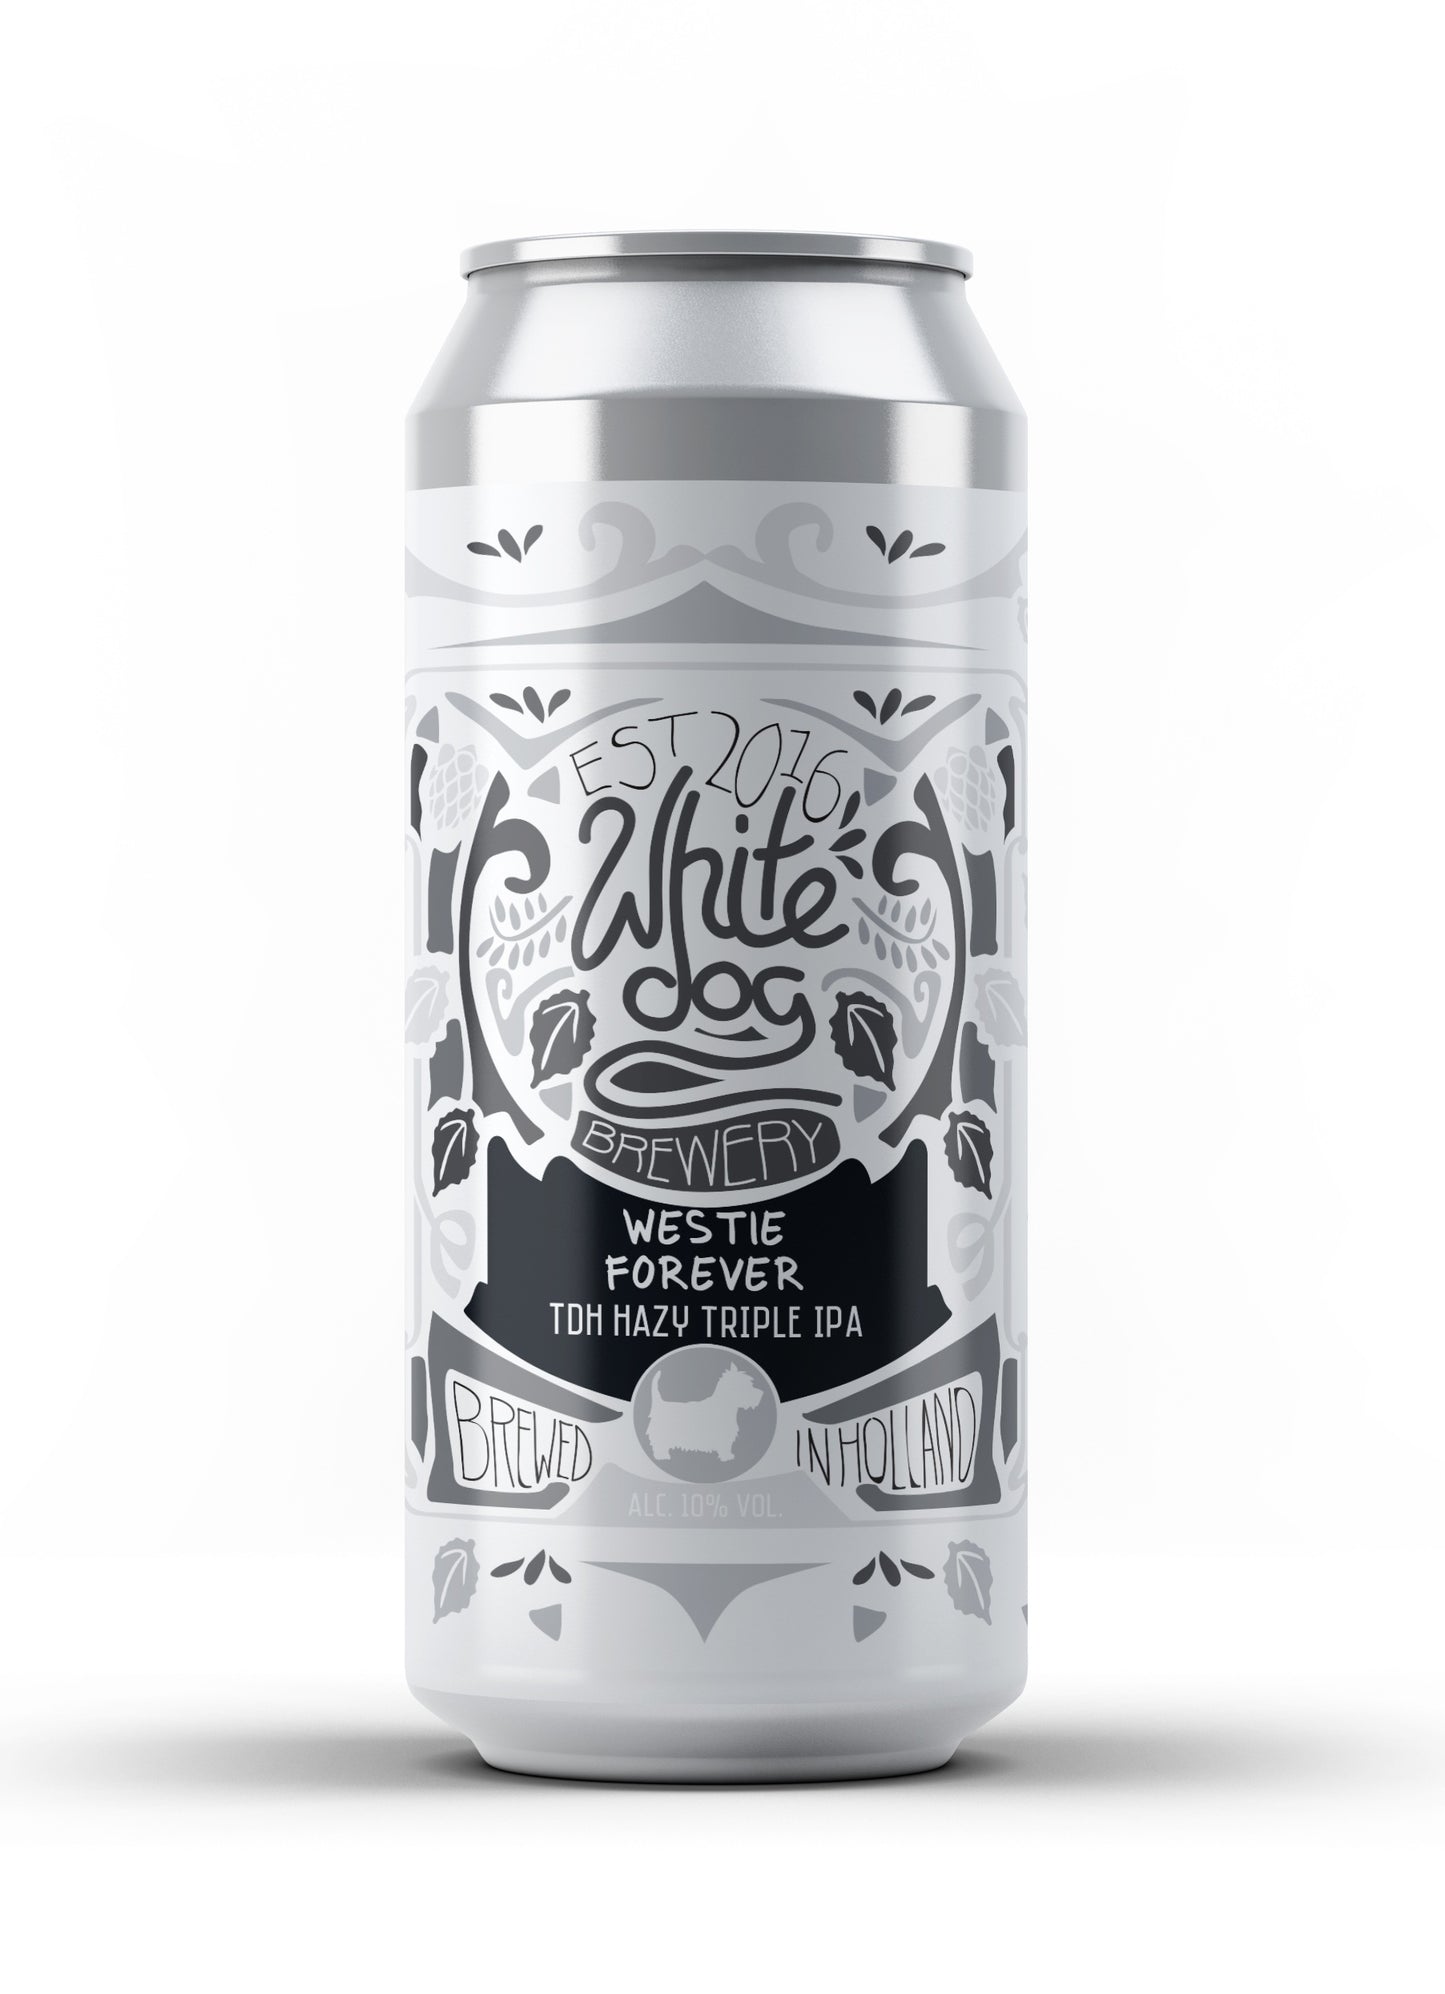 Westie Forever - Whitedog Brewery